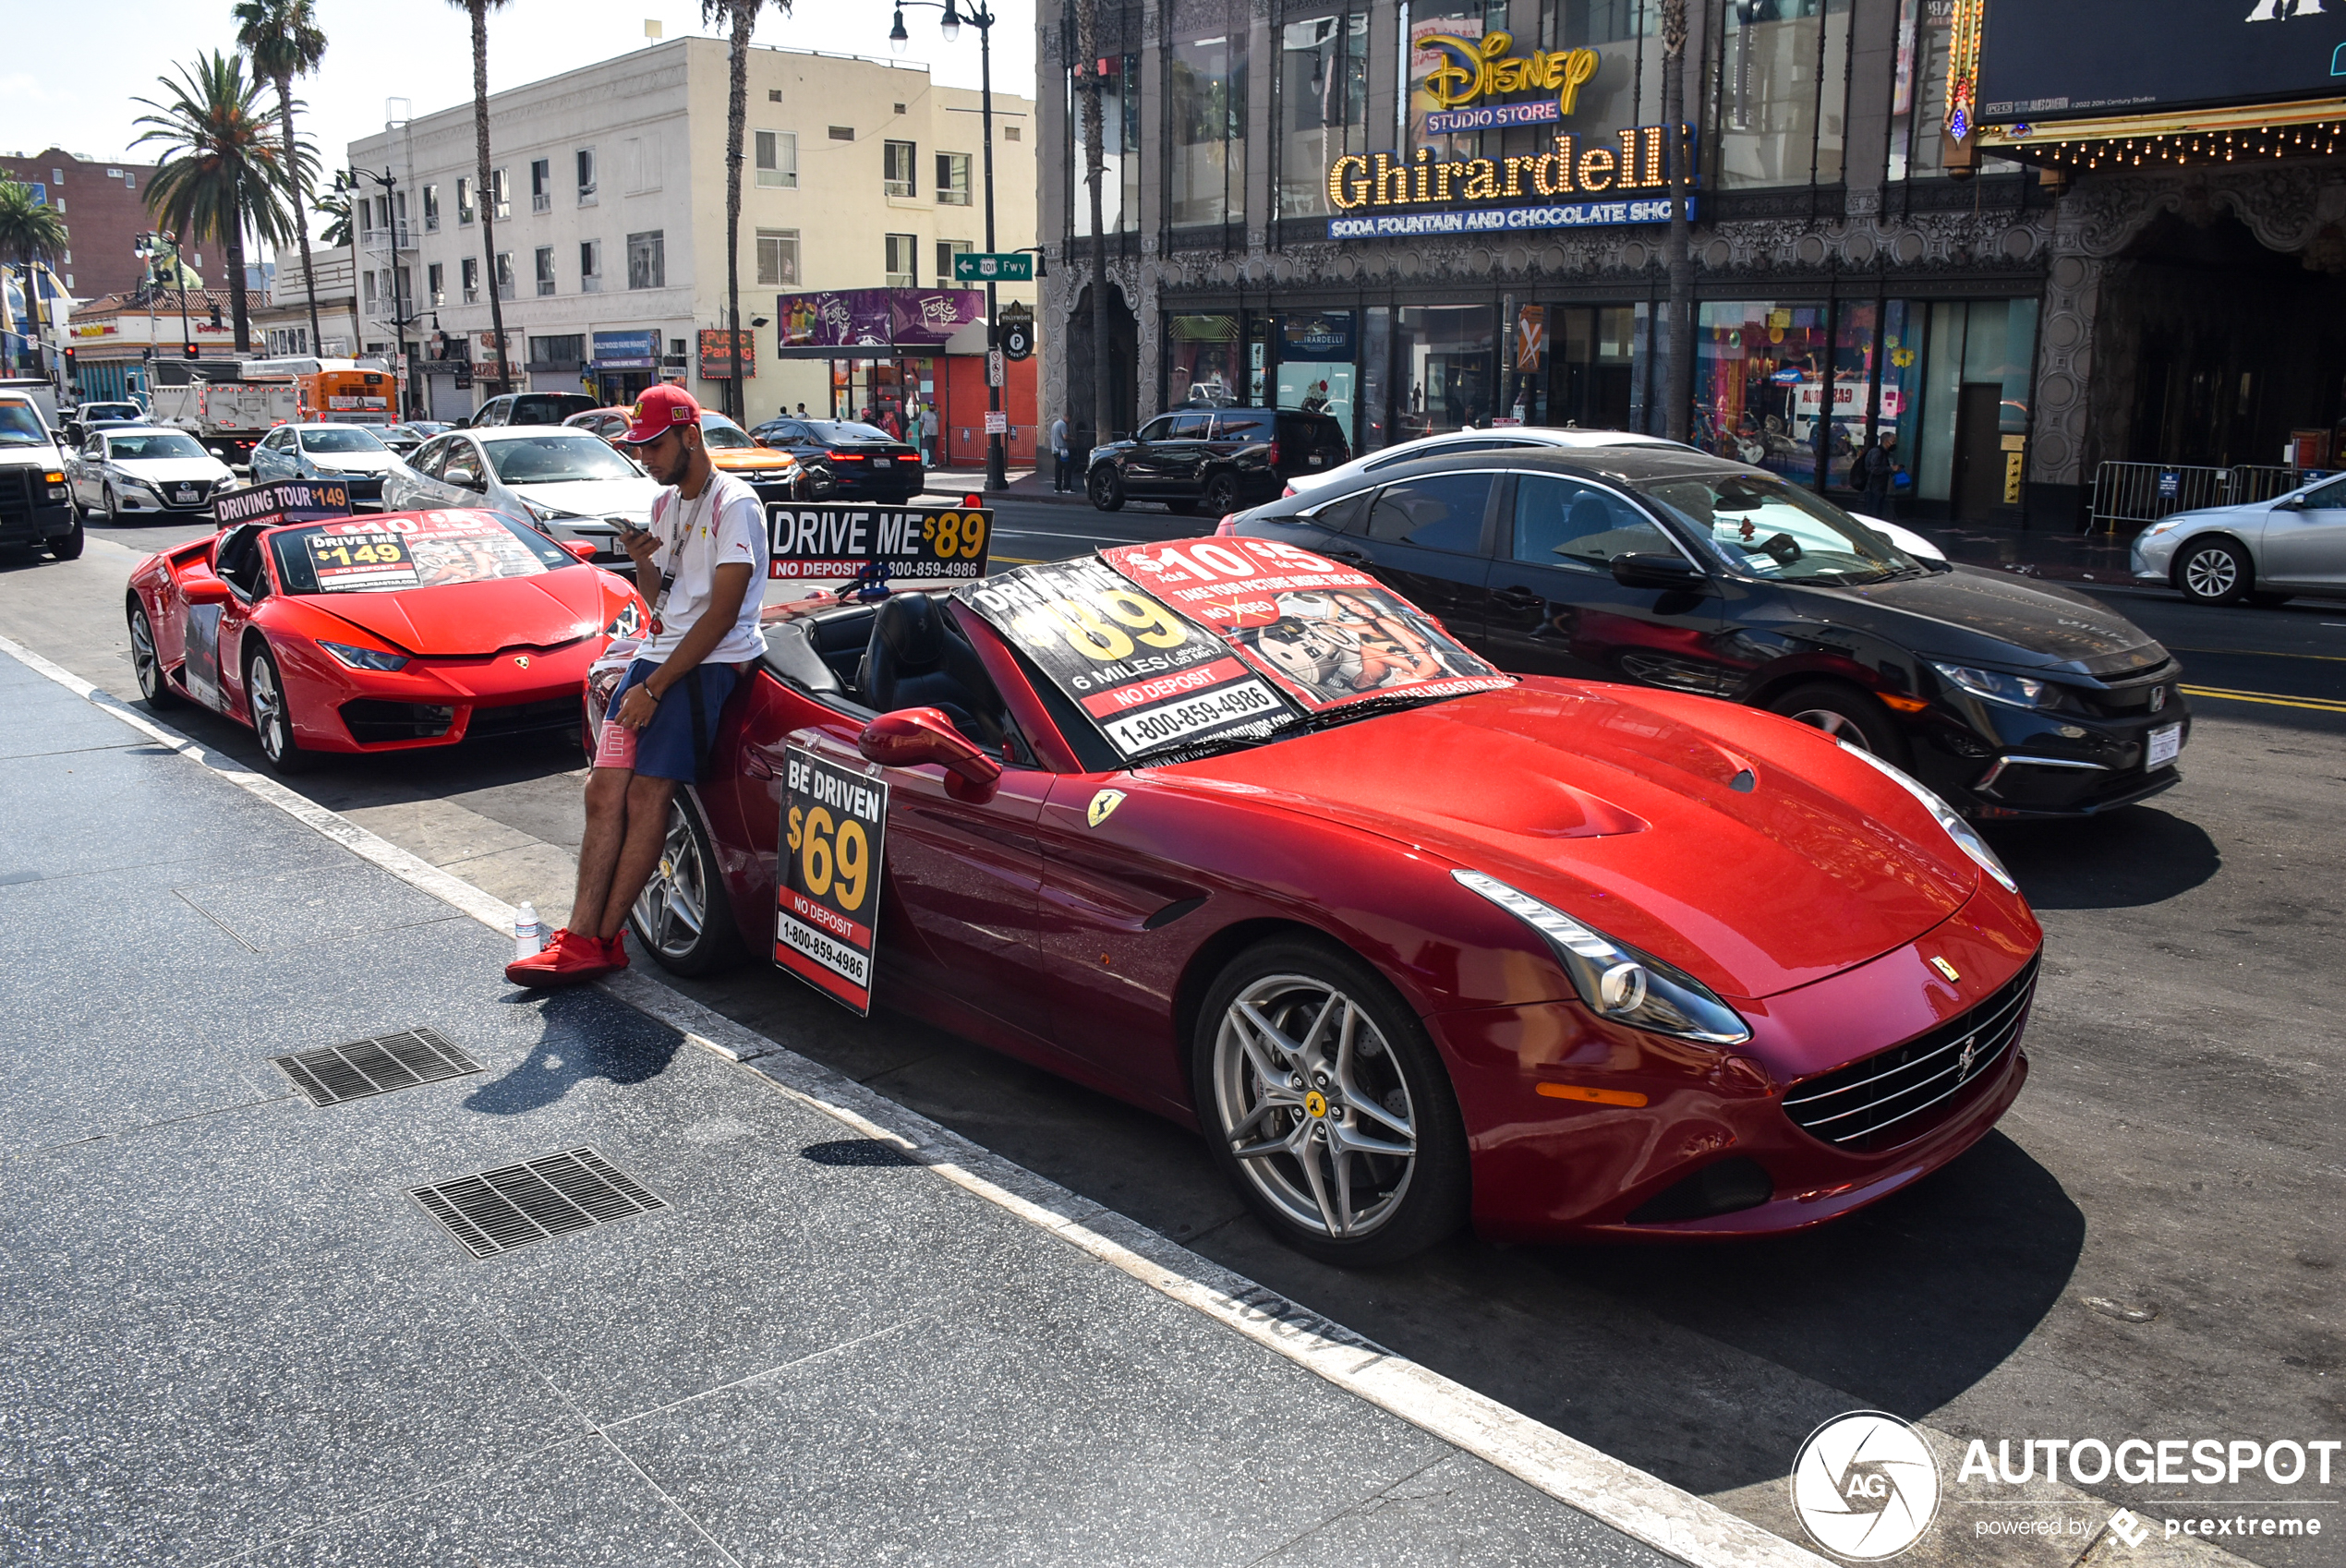 Ferrari California T in gedwongen prostitutie beland